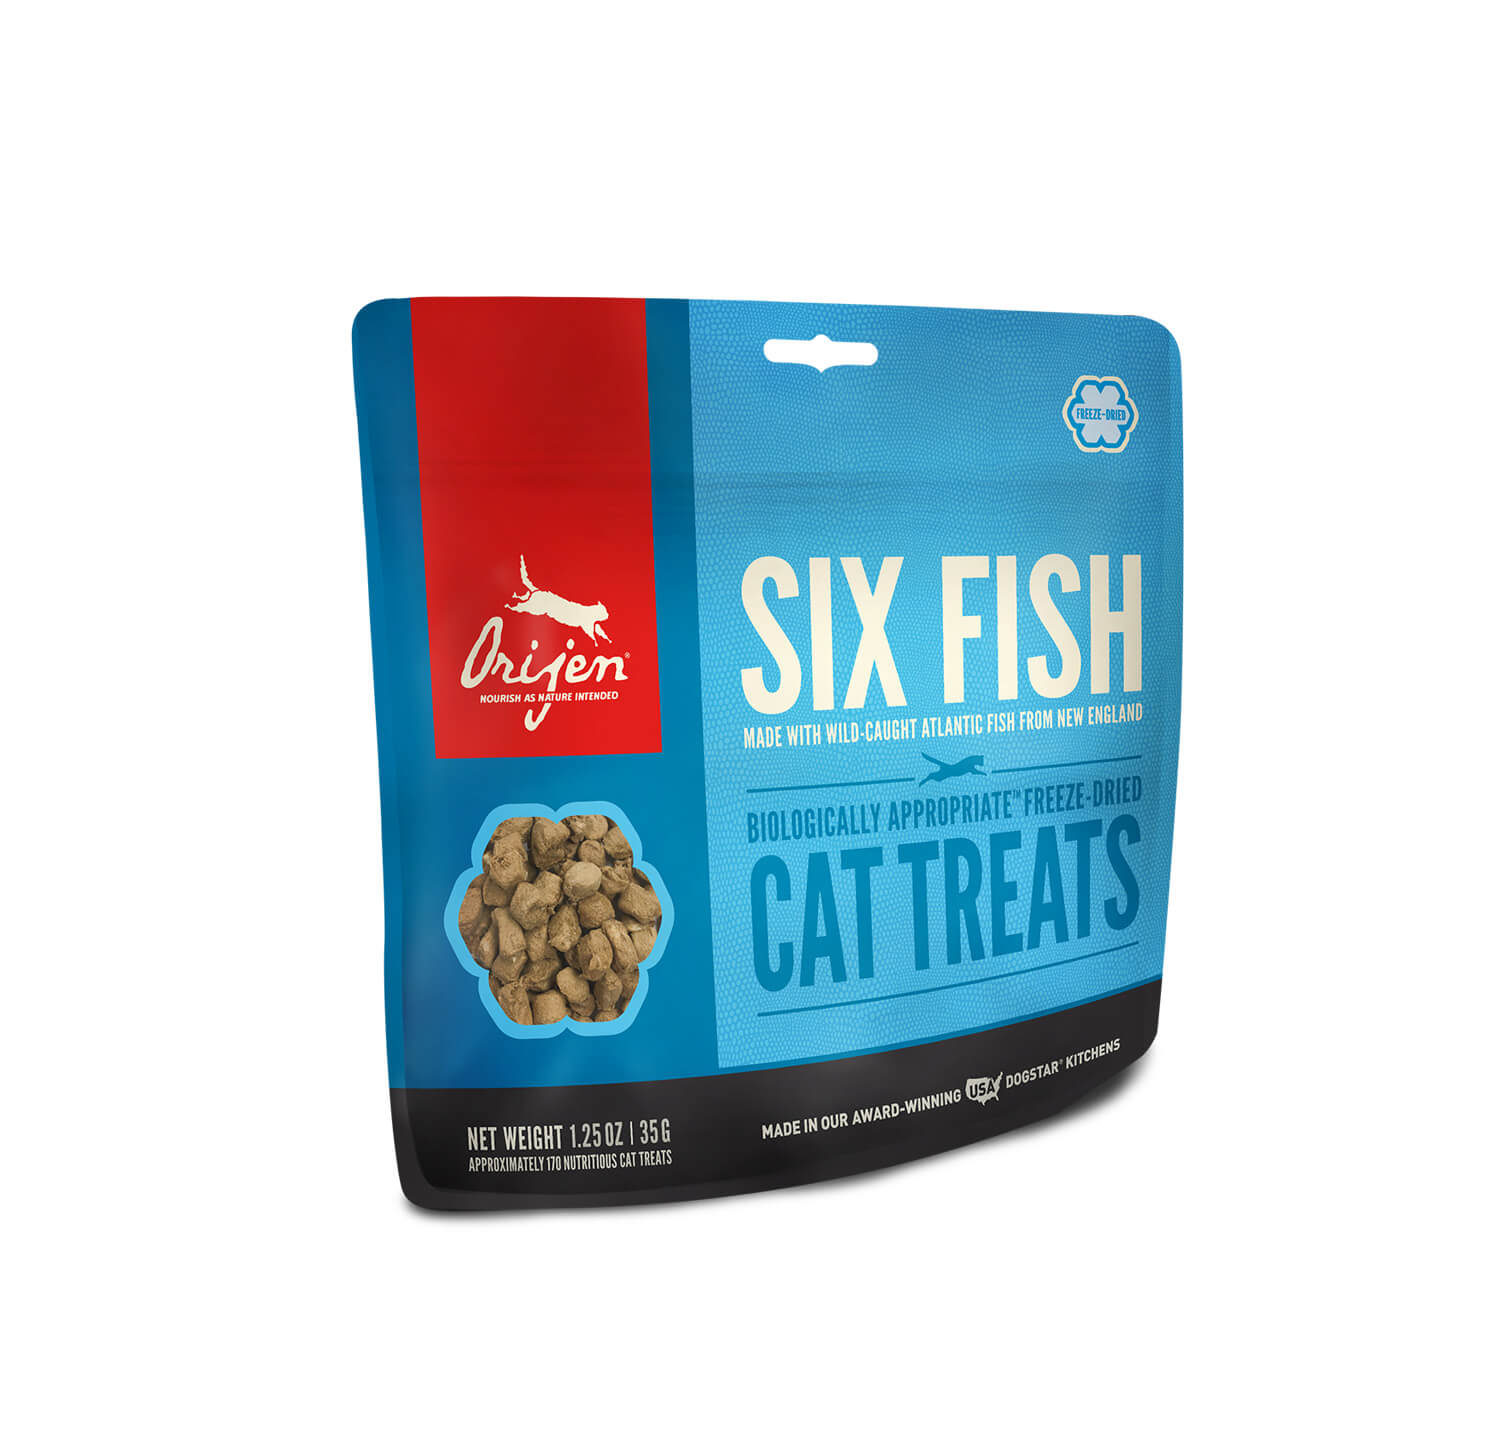 Orijen Cat Treats - Six Fish